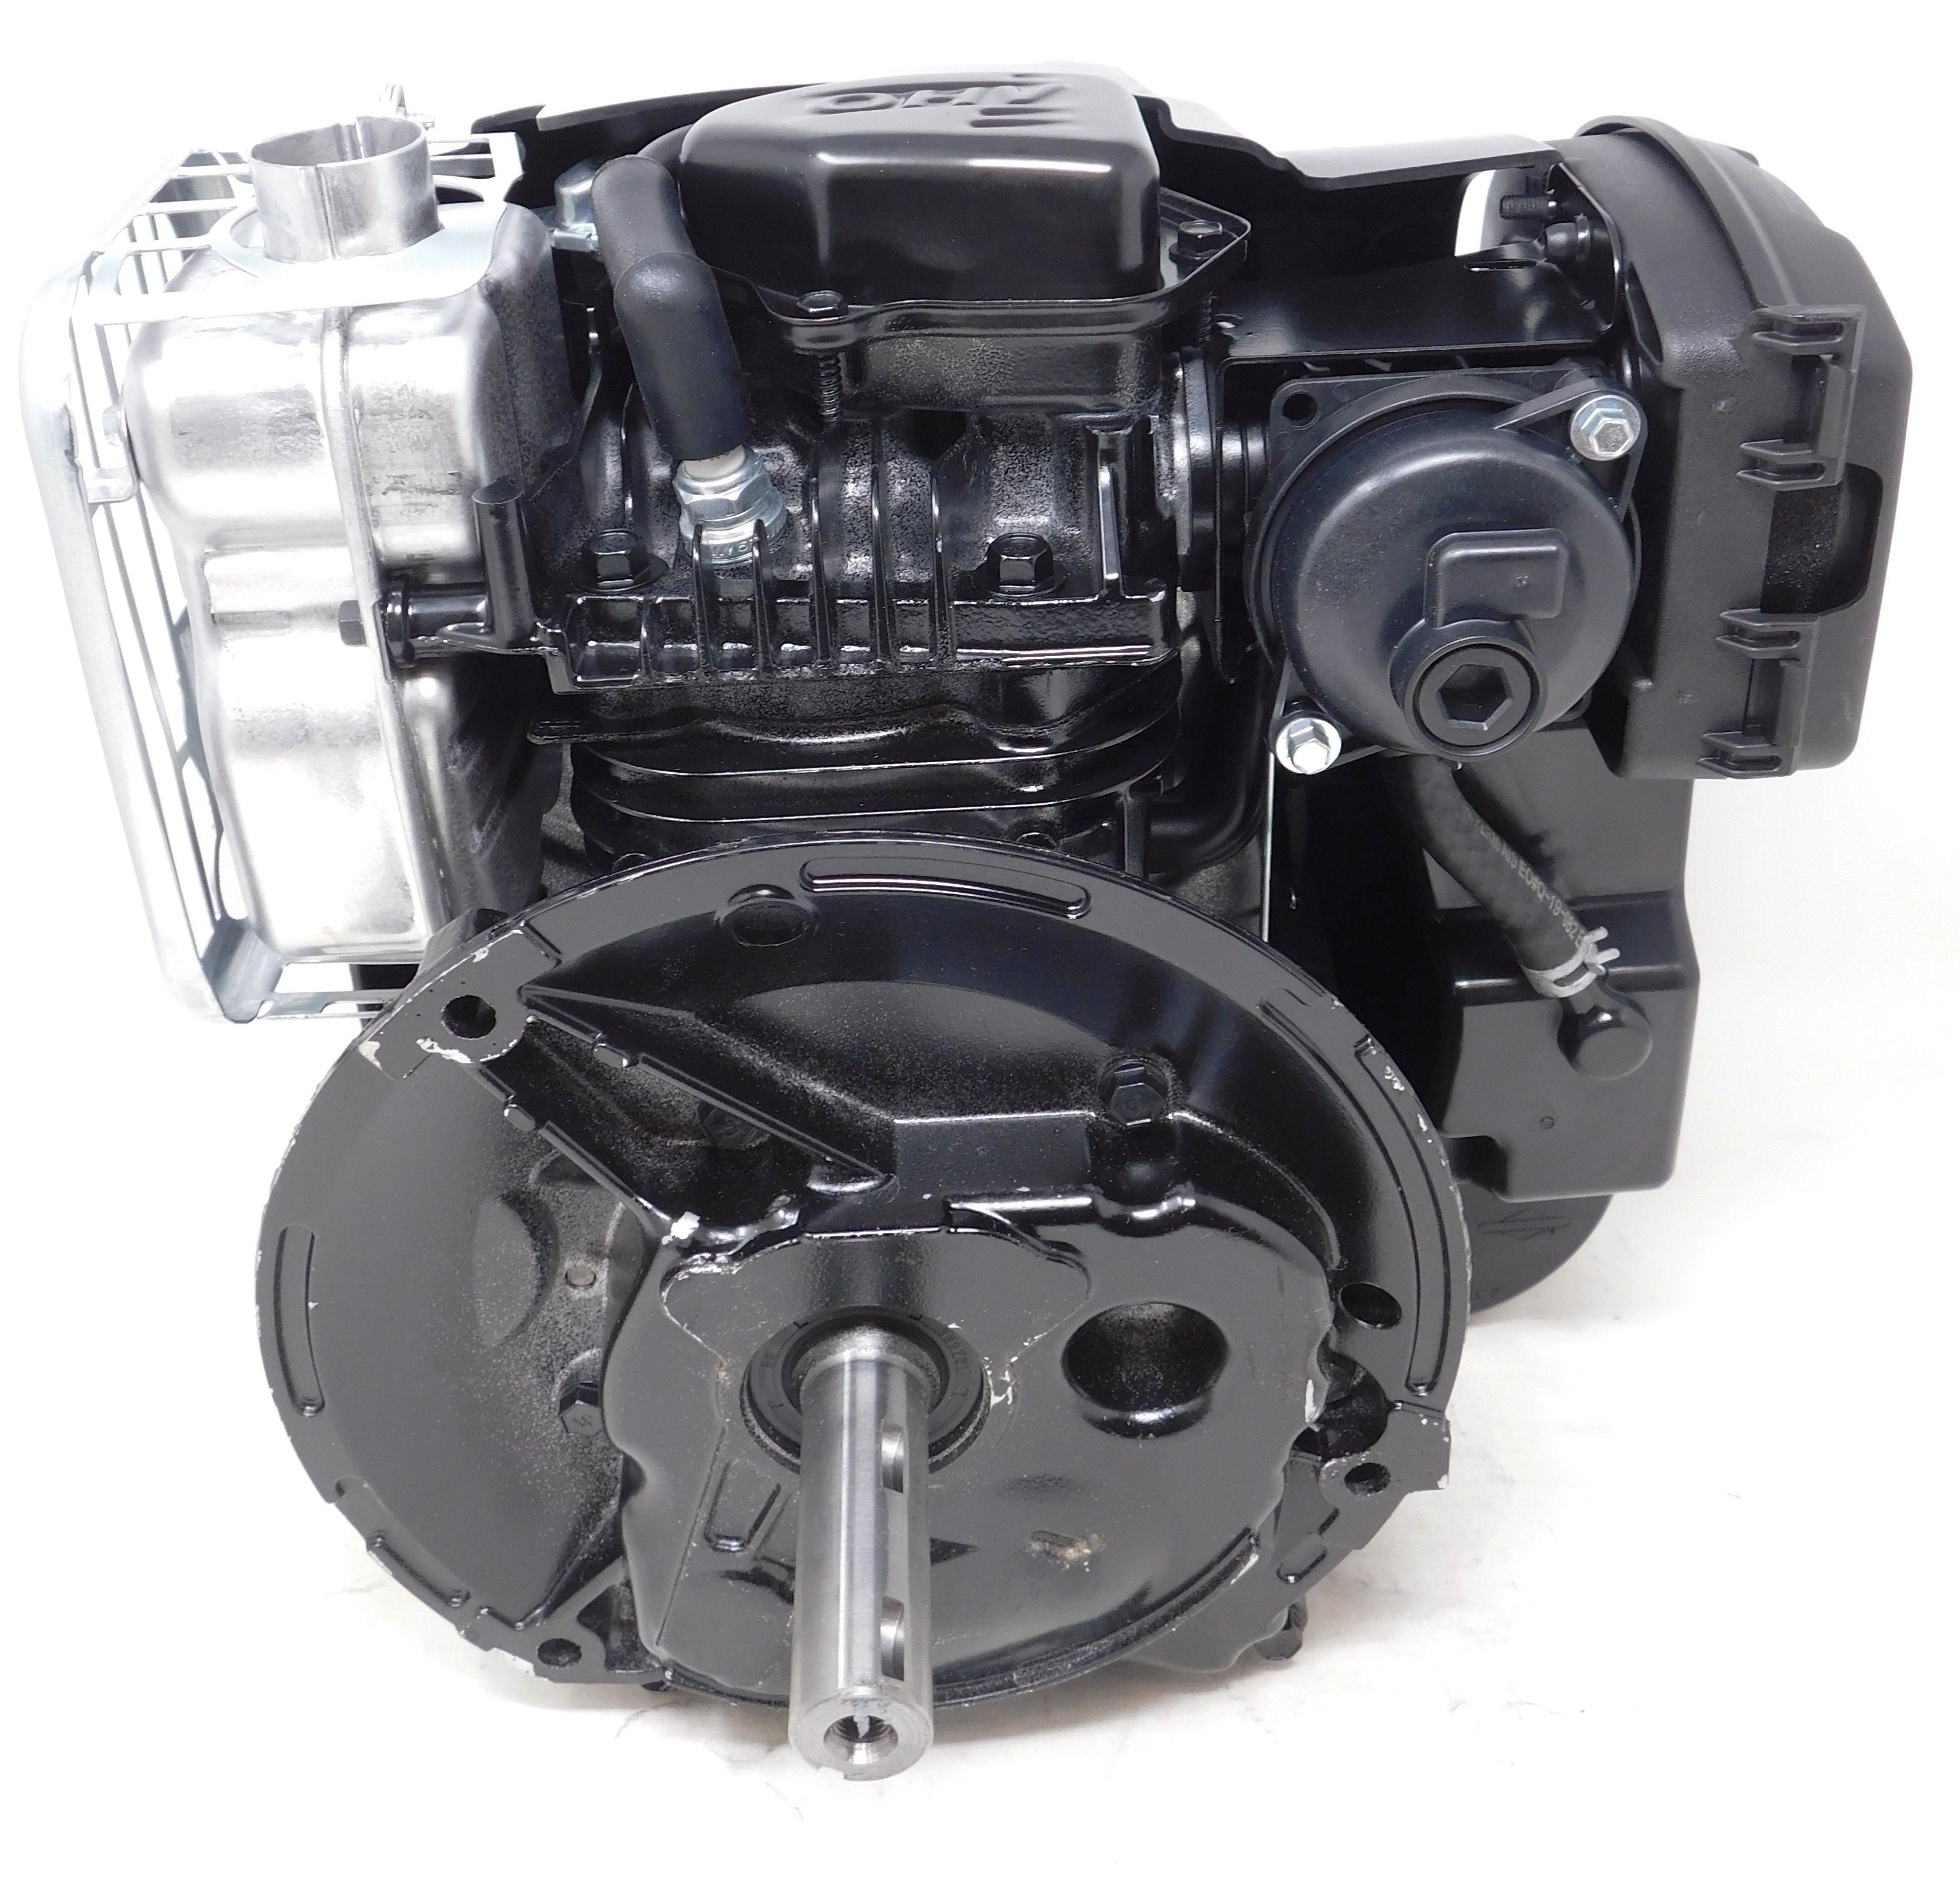 Briggs and Stratton 7.25 TP 163cc OHV Engine HF 7/8" x 3-5/32" #104M02-0270